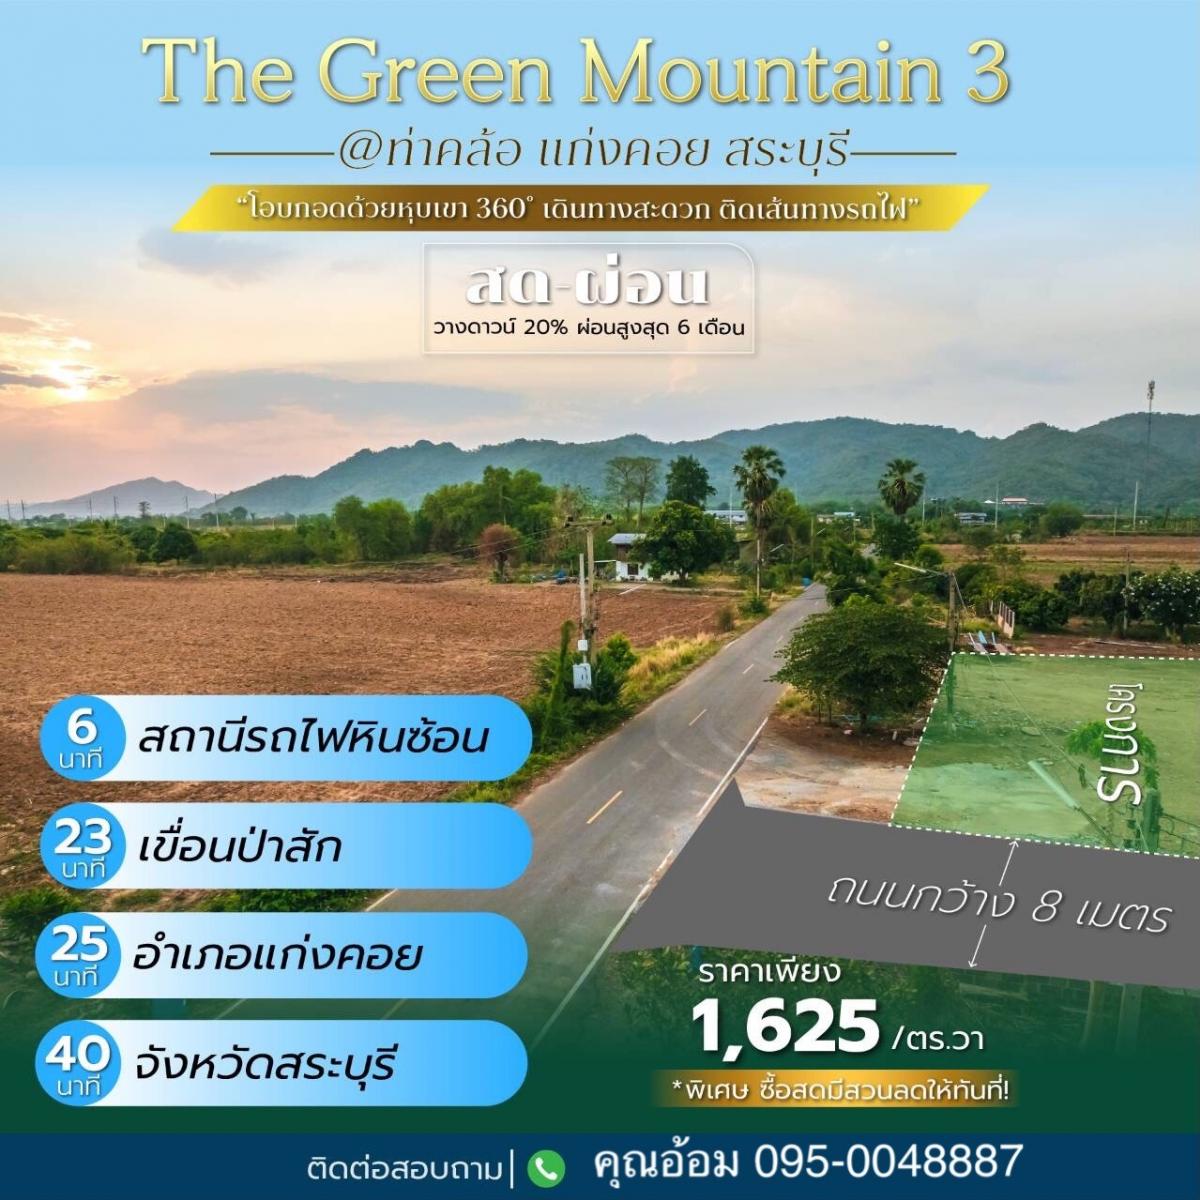 For SaleLandSaraburi : ⛰️ The Green Mountain 3, land allocated with beautiful mountain views, good atmosphere, Kaeng Khoi District, Saraburi 🌻